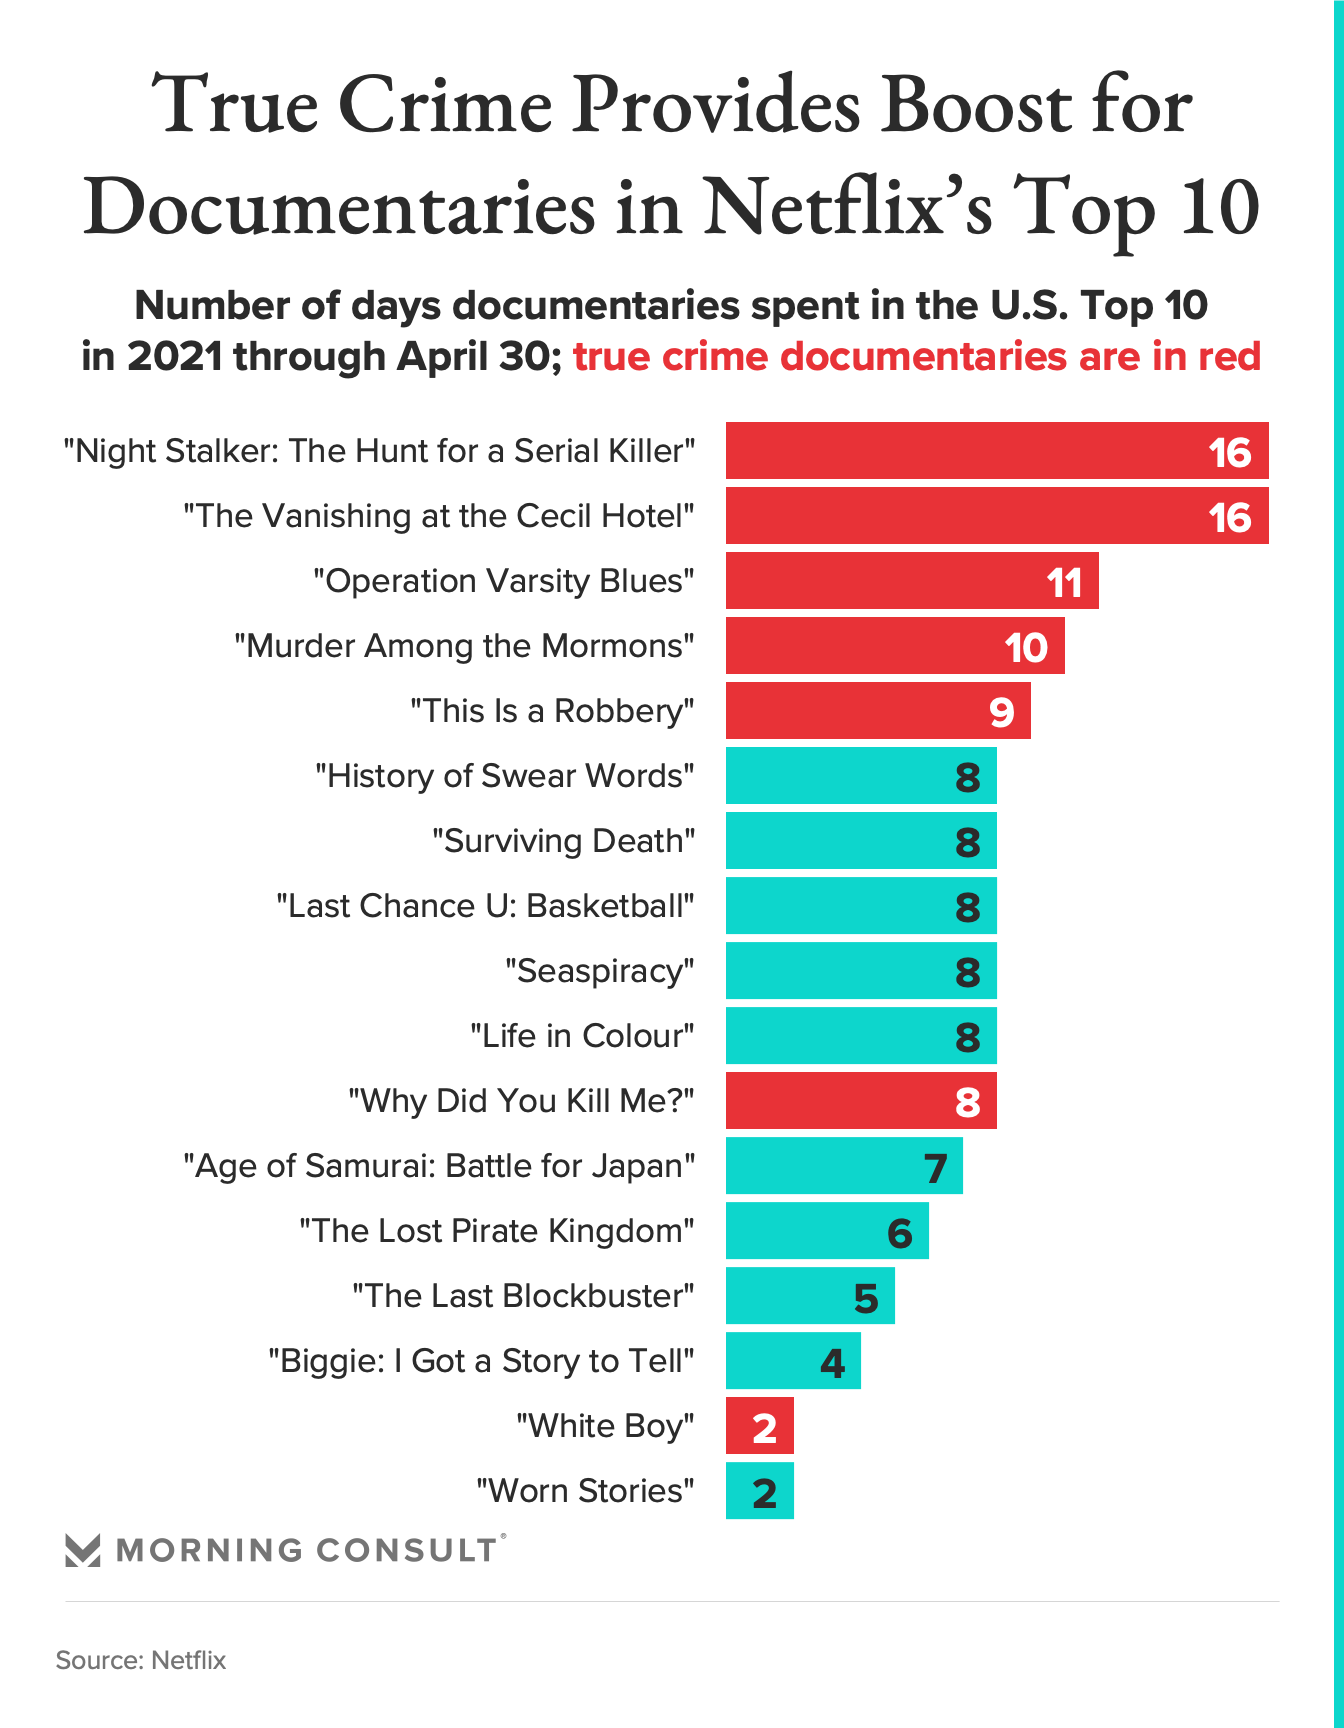 Documentaries Find a Regular Home in Netflix’s Top 10